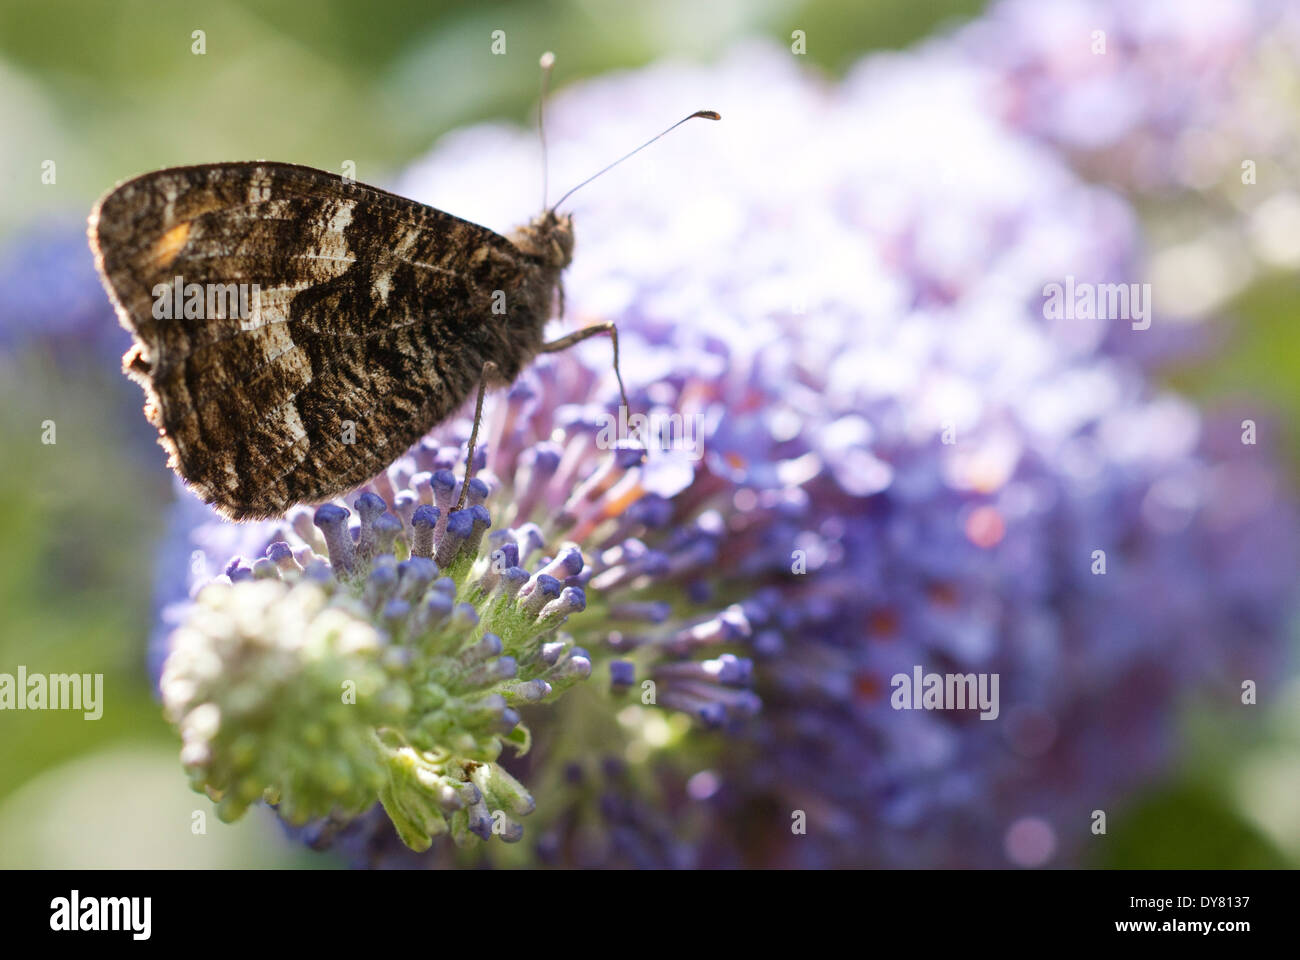 Grayling, Hipparchia semele Butterfly on Buddleja 'Lochinch', Shrub. July. Summer. Stock Photo